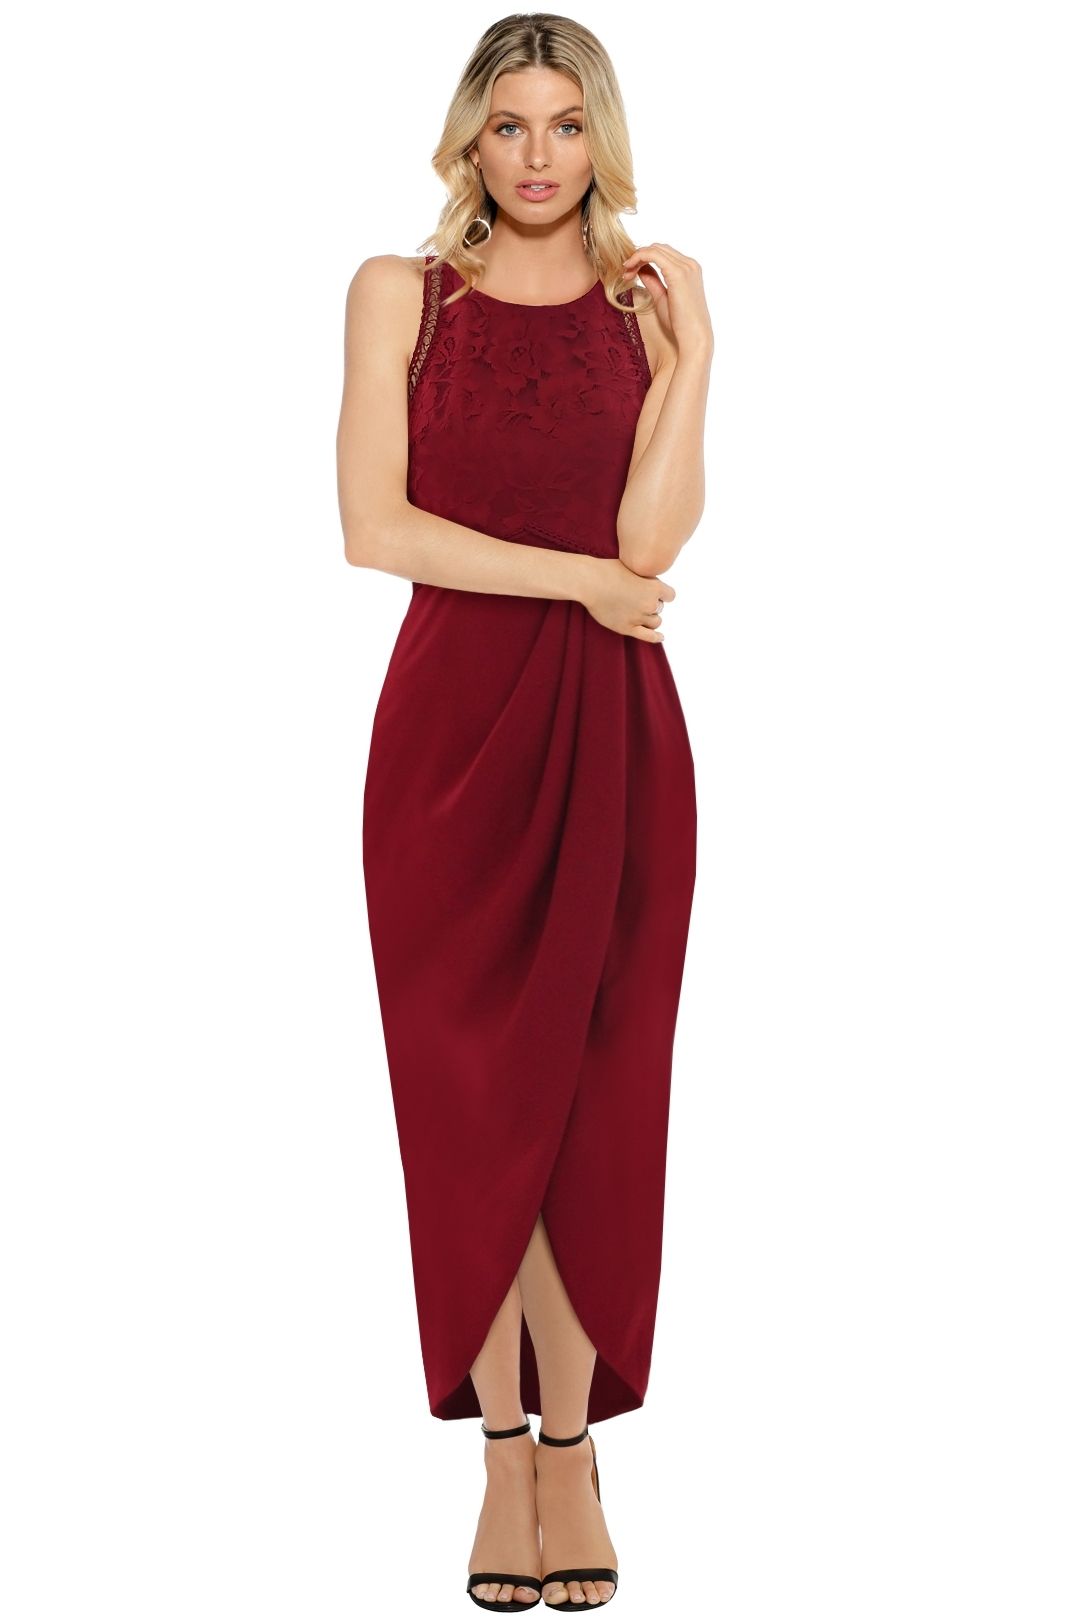 The Dress Shoppe - Spirit Carnivale Dress - Red - Front